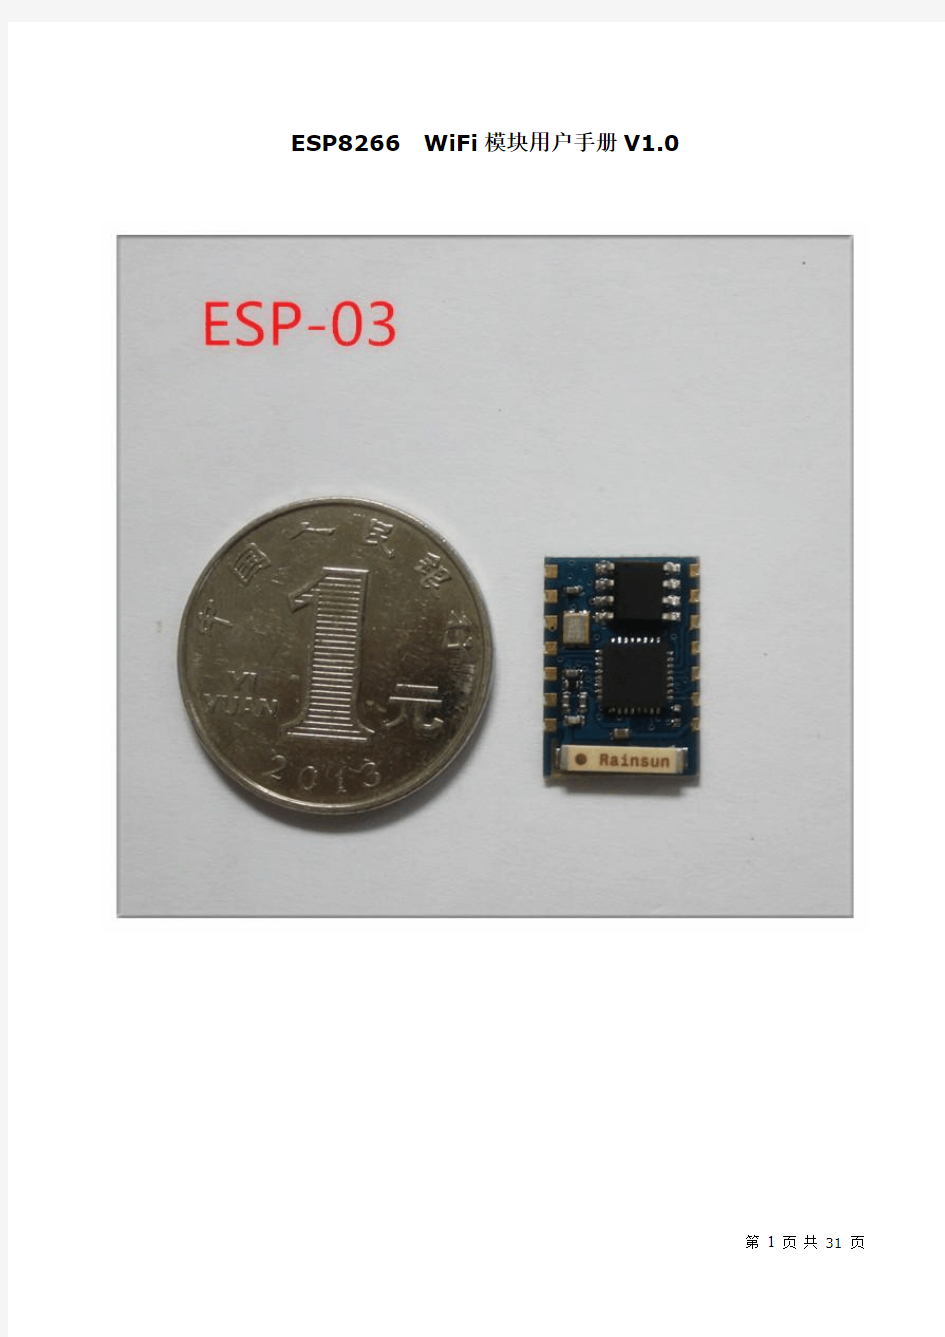 ESP8266-03 WiFi模块用户手册V1.0(1)